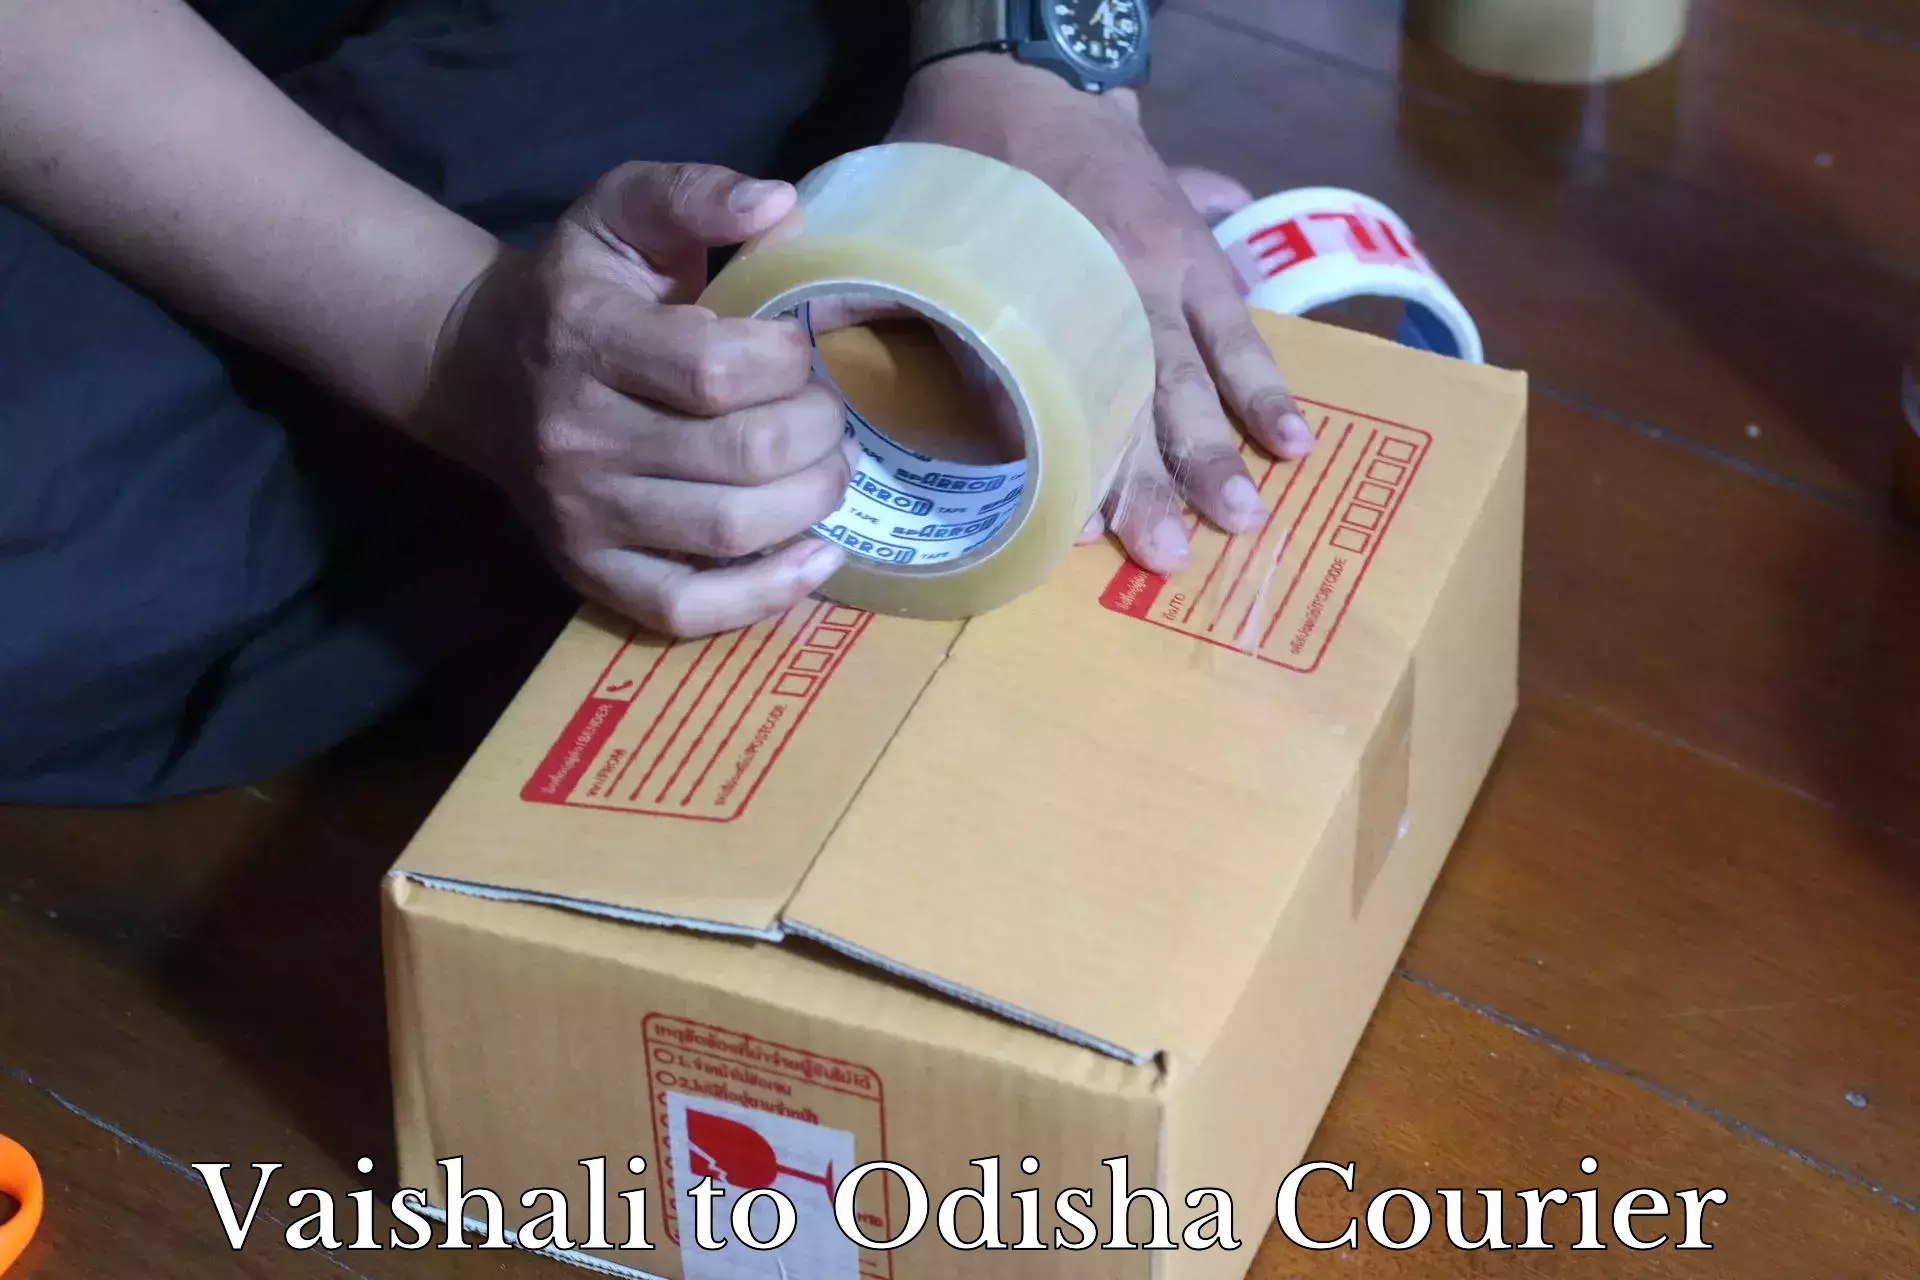 Courier service innovation Vaishali to Chandikhol